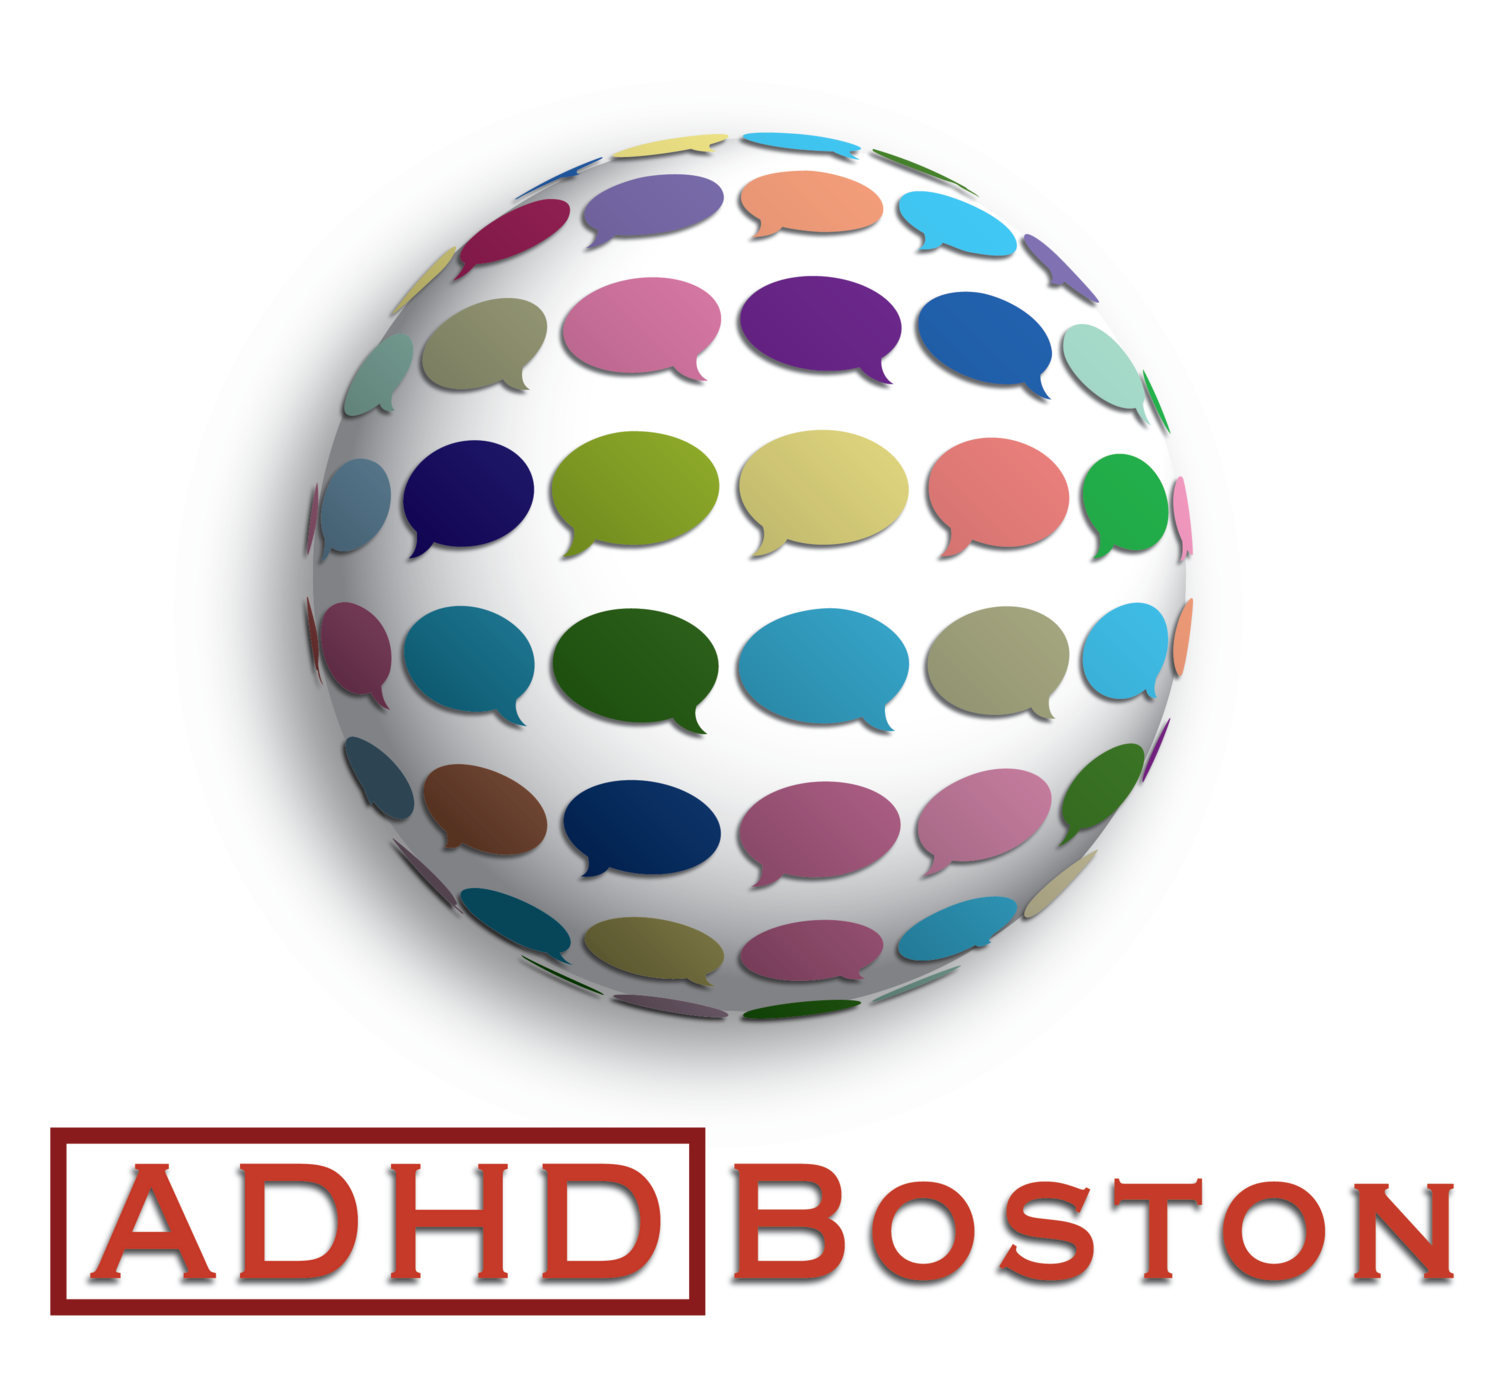 ADHD Boston